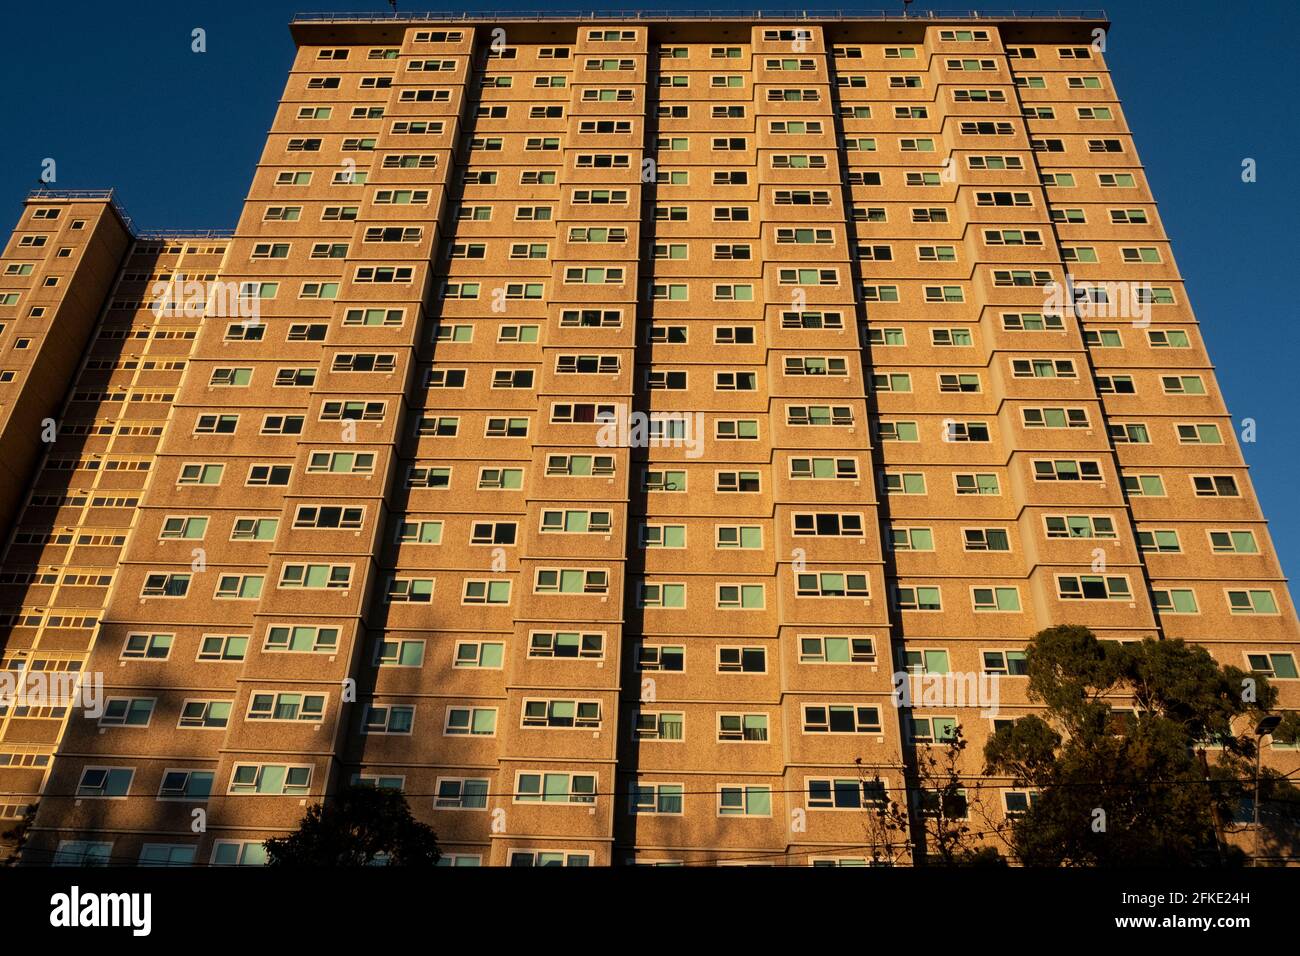 Housing commission flats in Lygon Street Carlton, Melbourne, Victoria, Australia Stock Photo